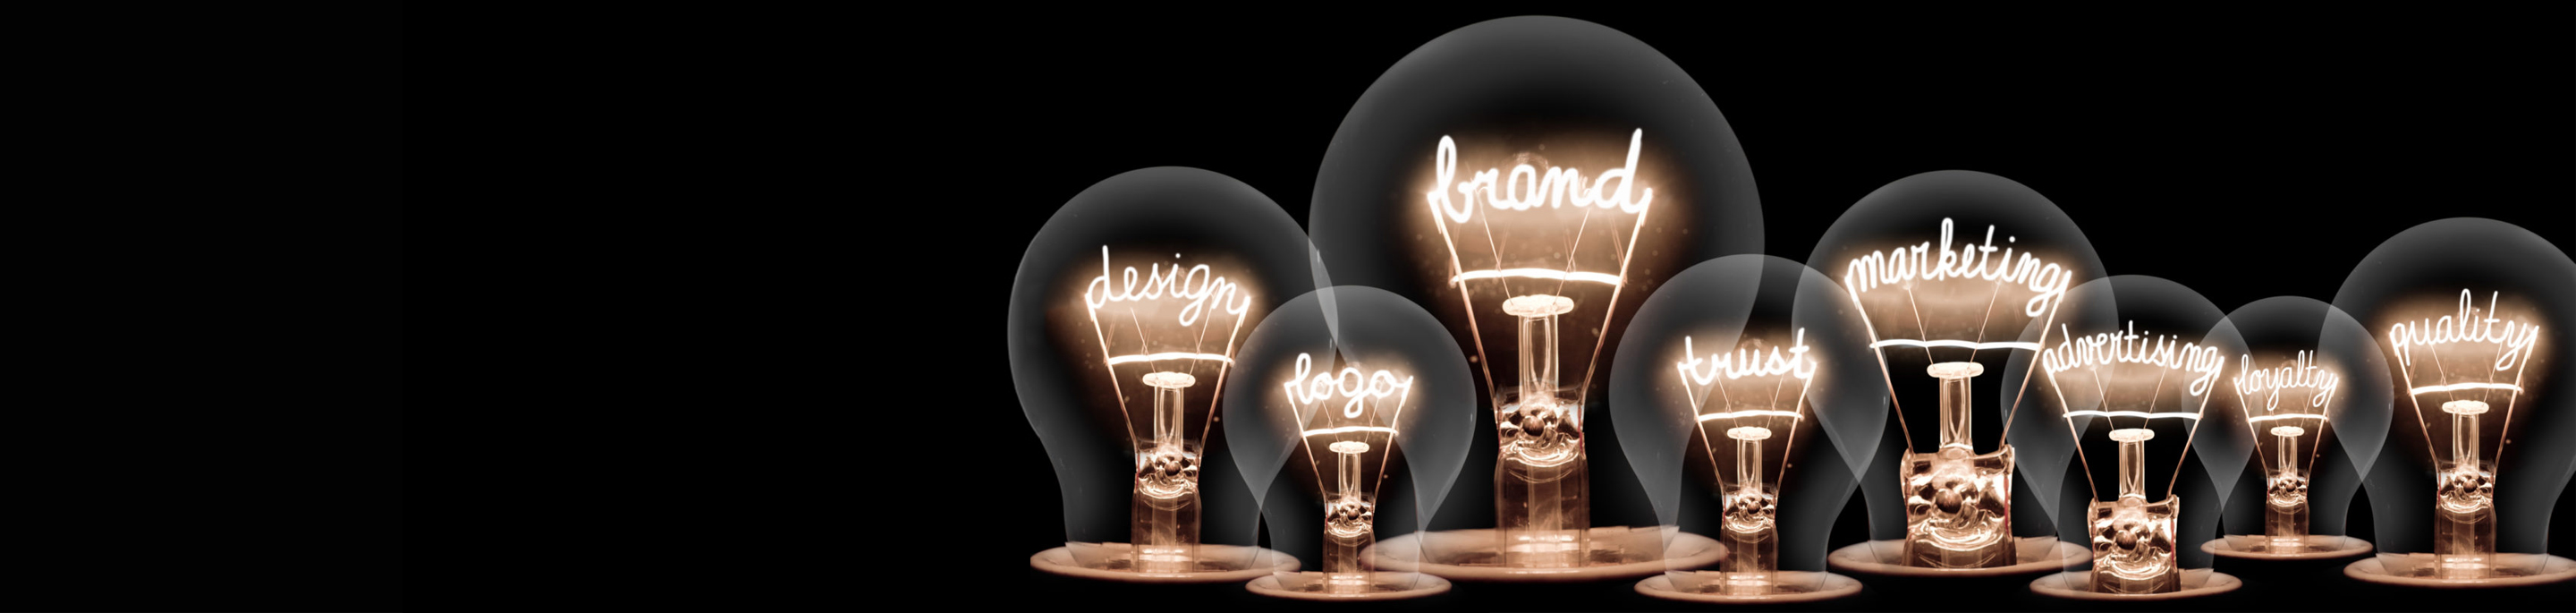 marketing light bulbs